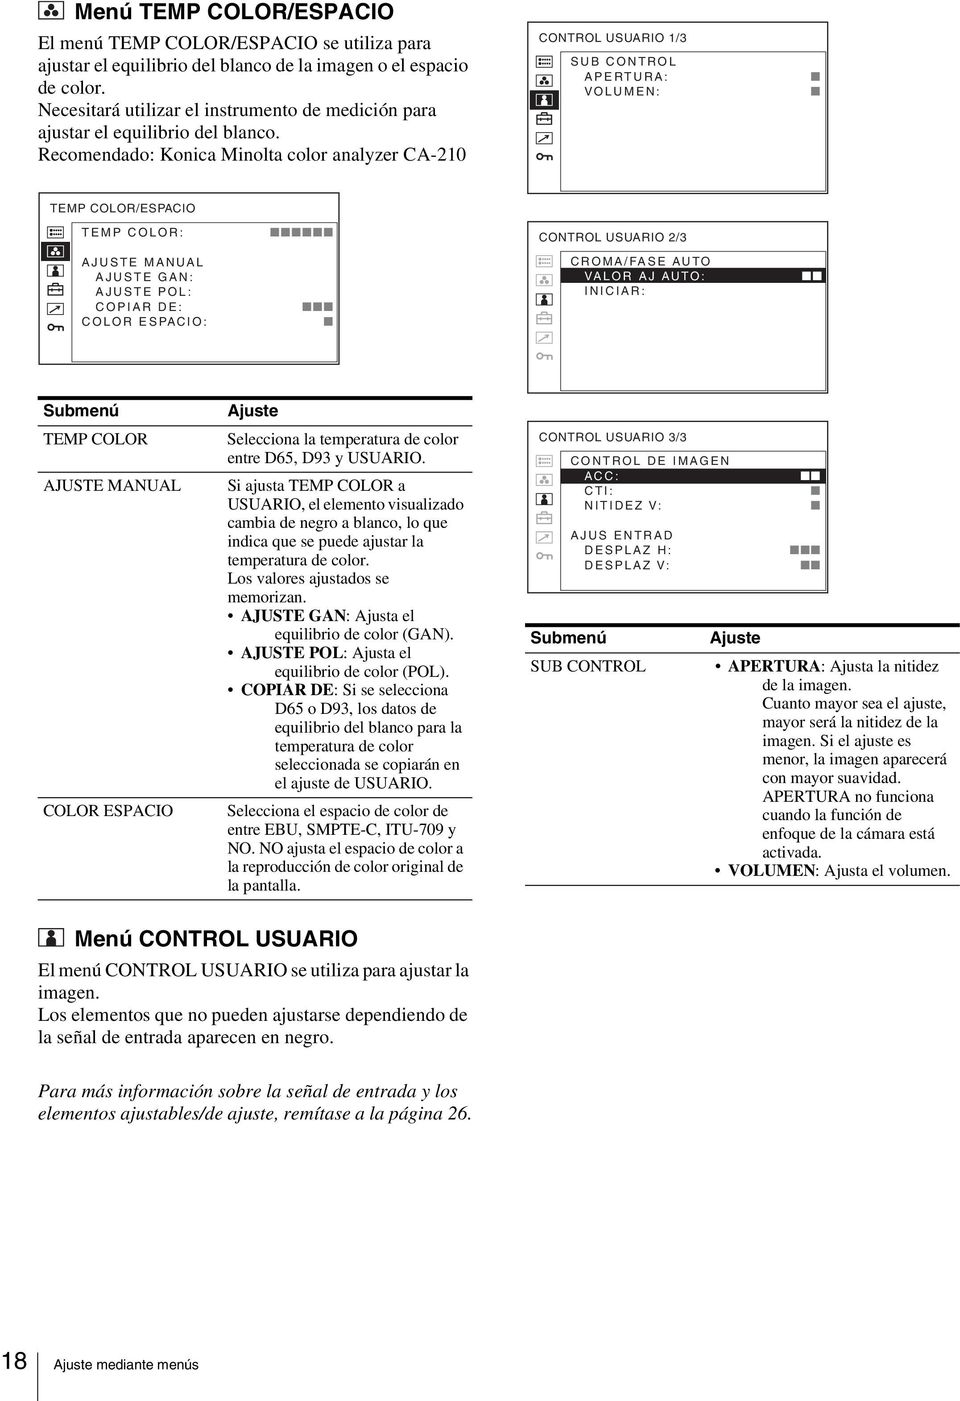 Recomendado: Konica Minolta color analyzer CA-210 CONTROL USUARIO 1/3 SUB CONTROL APERTURA: VOLUMEN: x x TEMP COLOR/ESPACIO TEMP COLOR: CONTROL USUARIO 2/3 AJUSTE MANUAL AJUSTE GAN: AJUSTE POL: